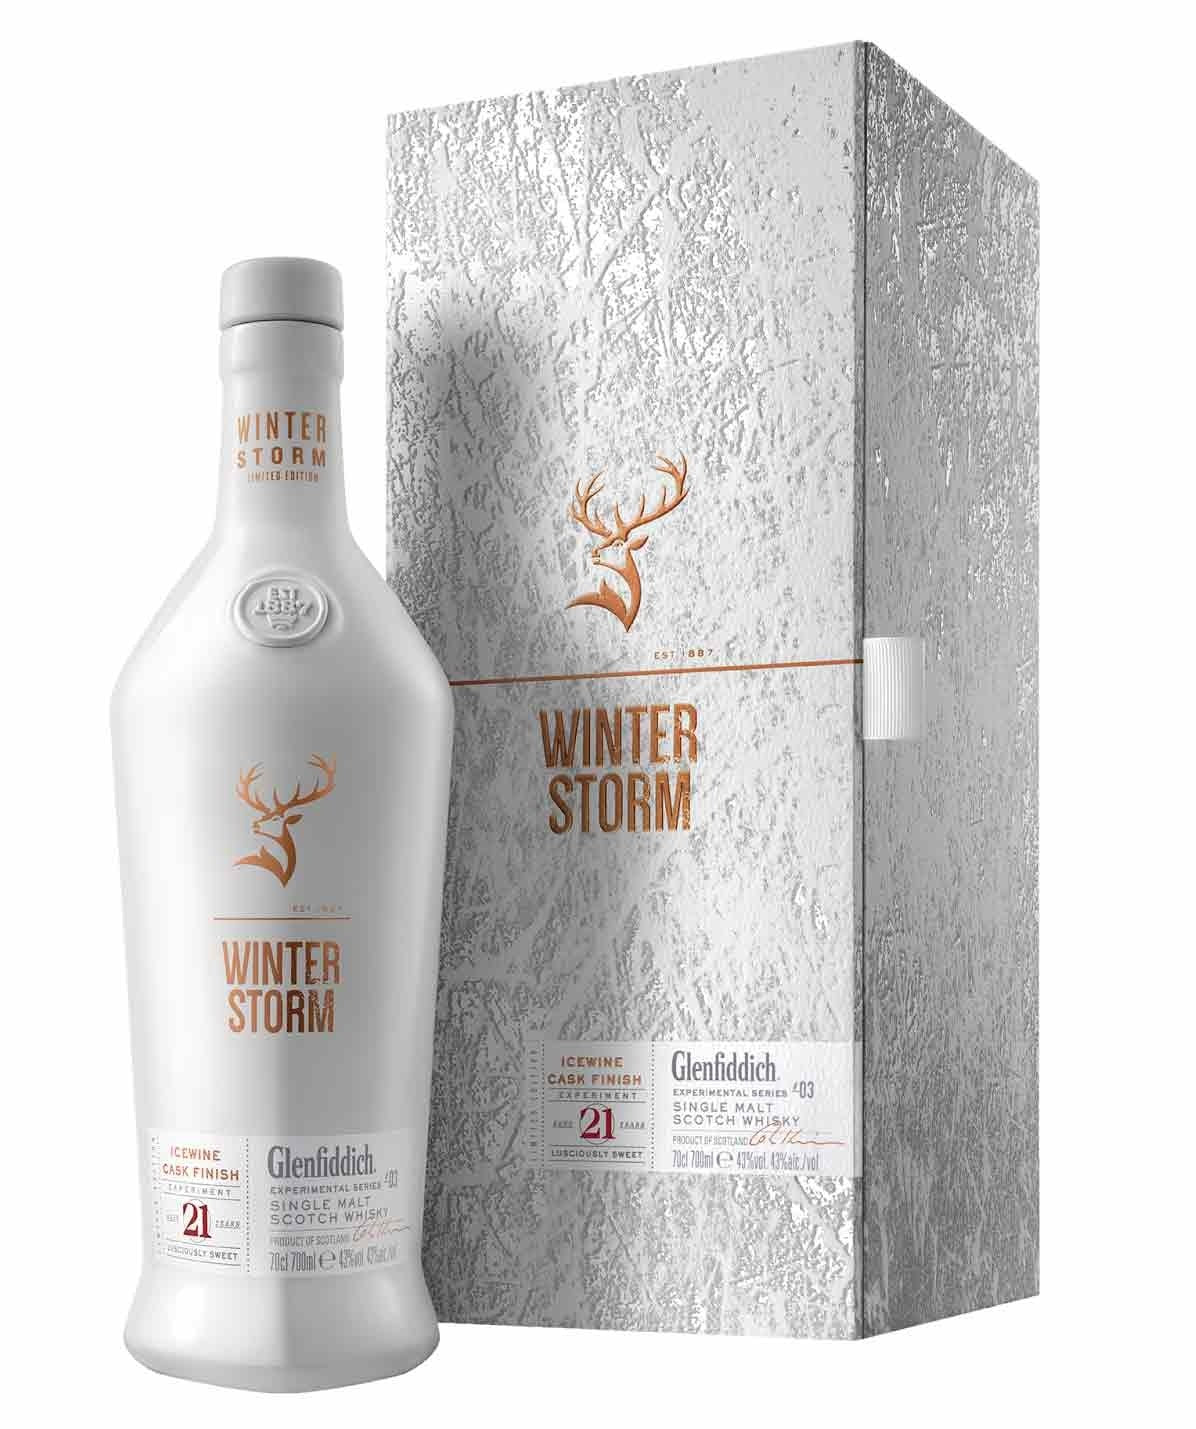 Glenfiddich Single Malt Scotch Whisky 21 Year Experimental Series  Winter Storm (750ml)